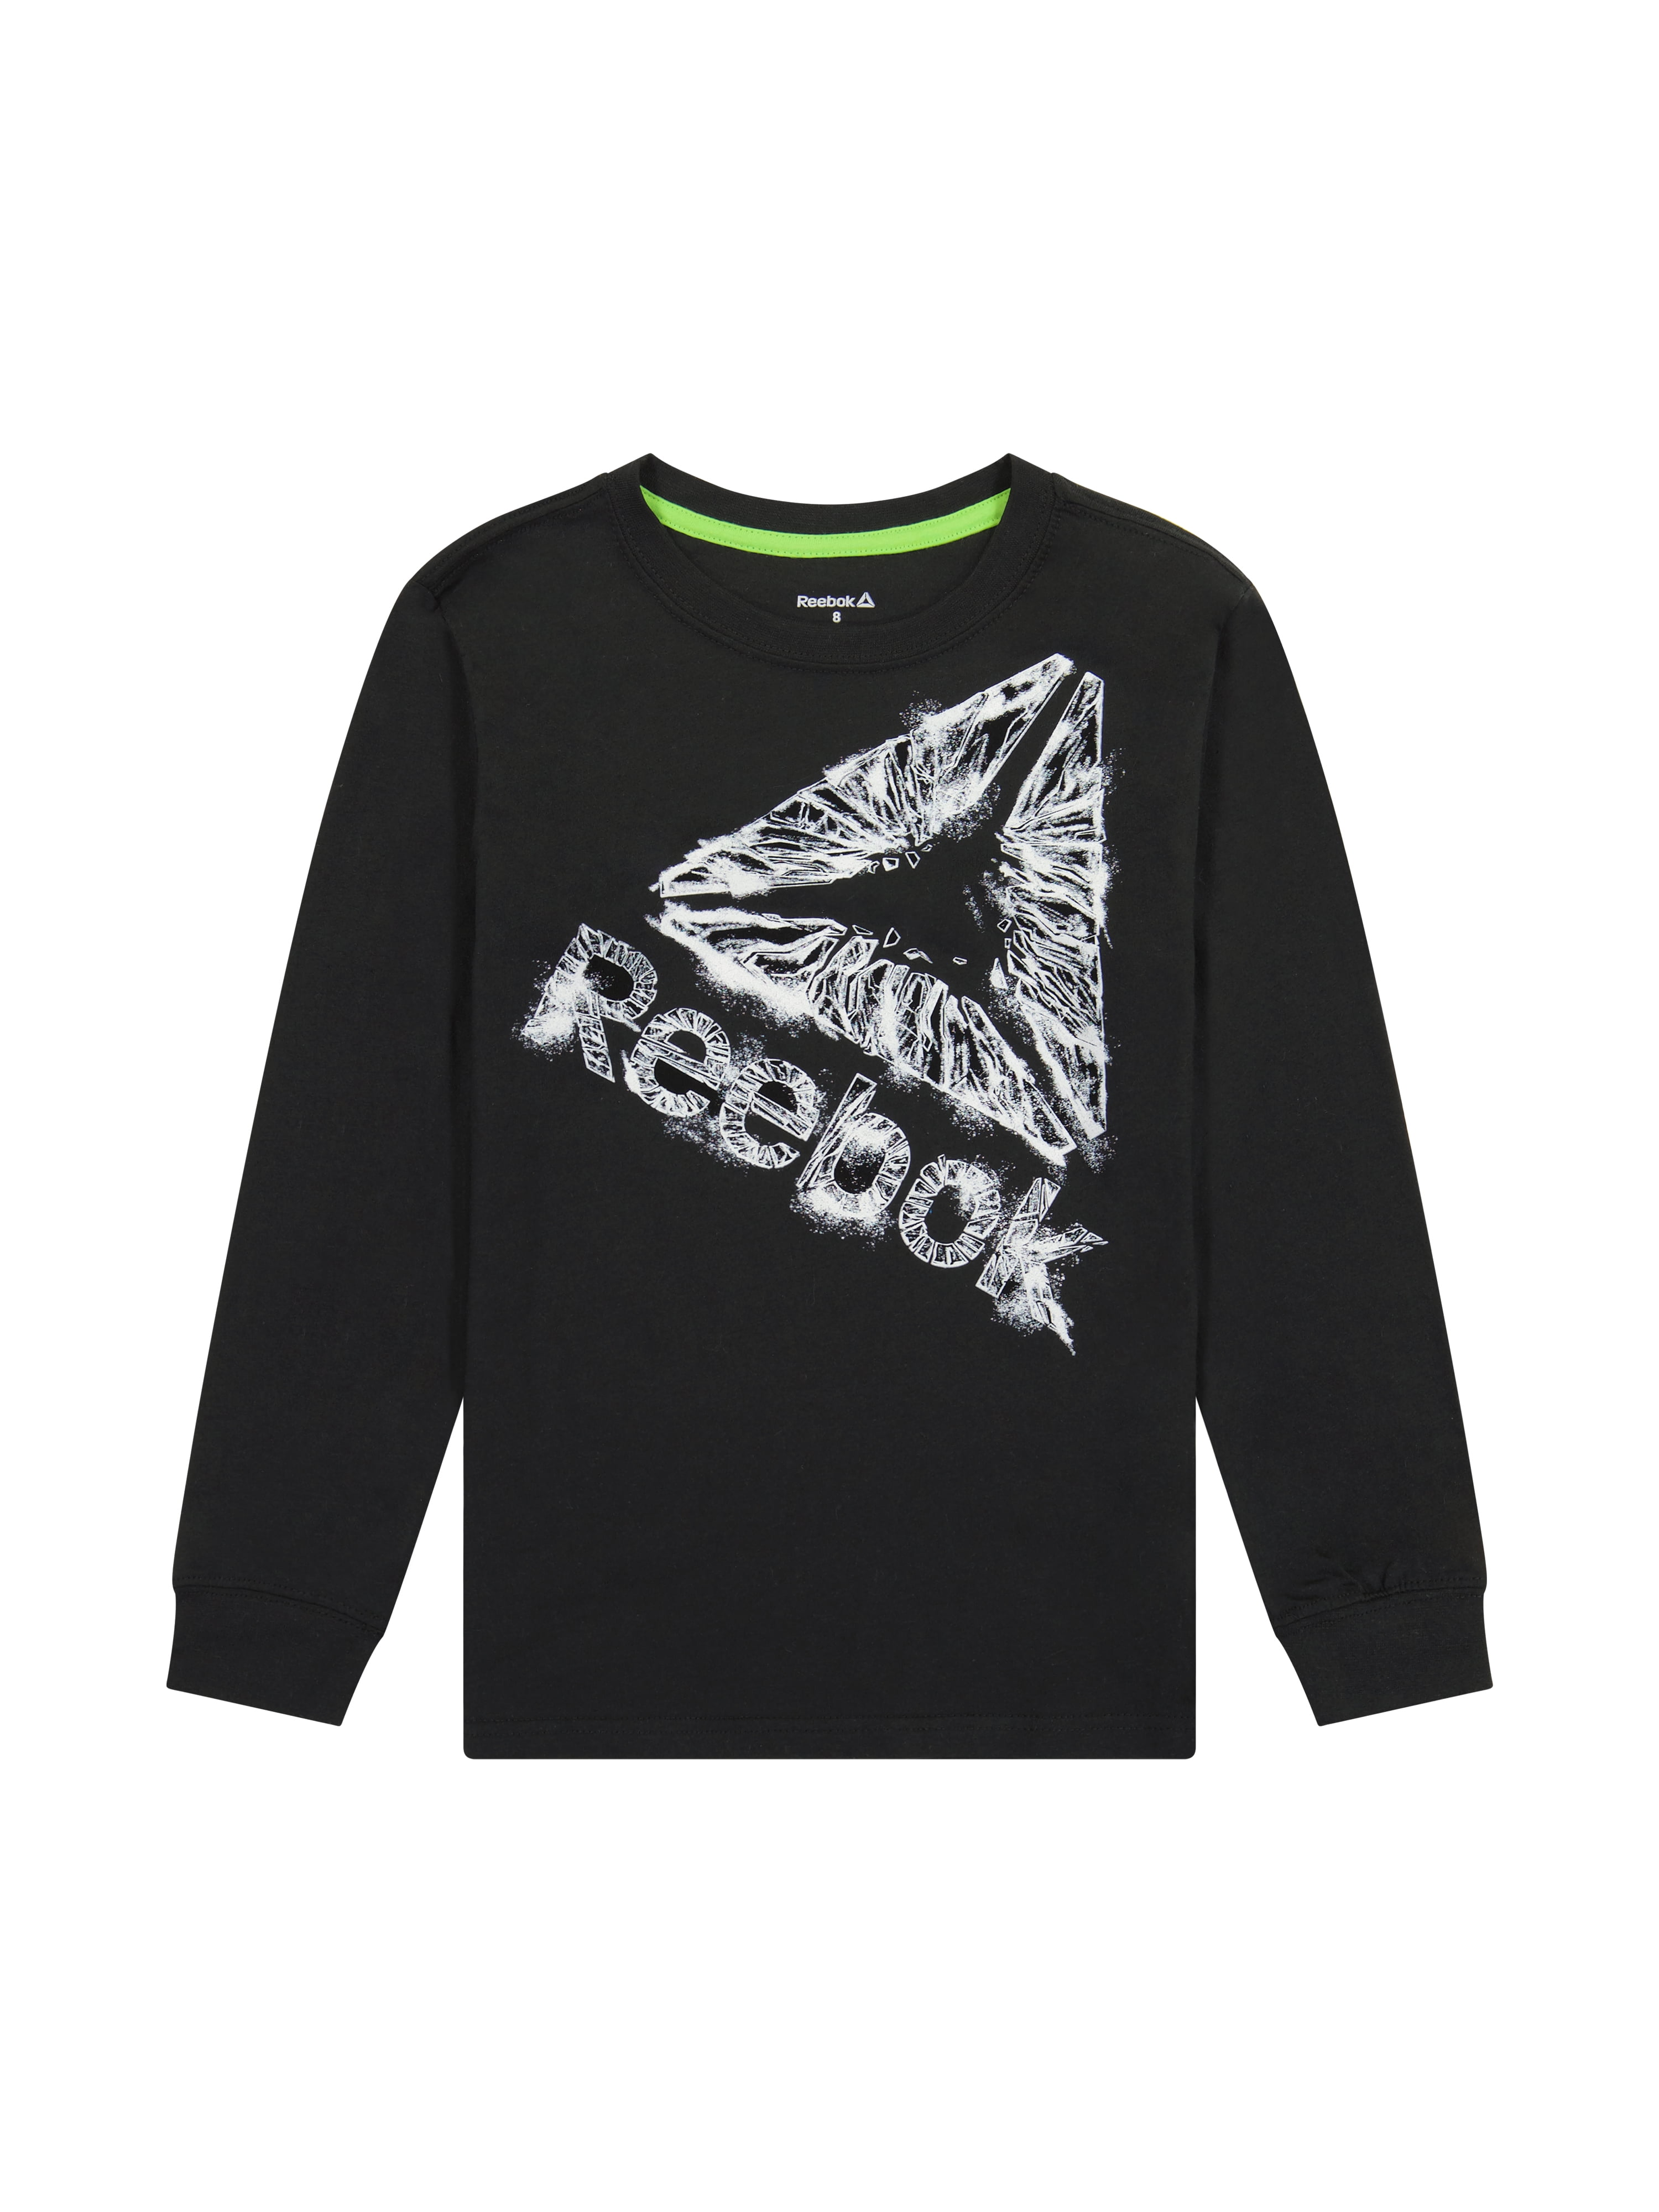 Reebok Boys Active Long Sleeve Graphic T-Shirt, Sizes 4-18 - Walmart.com